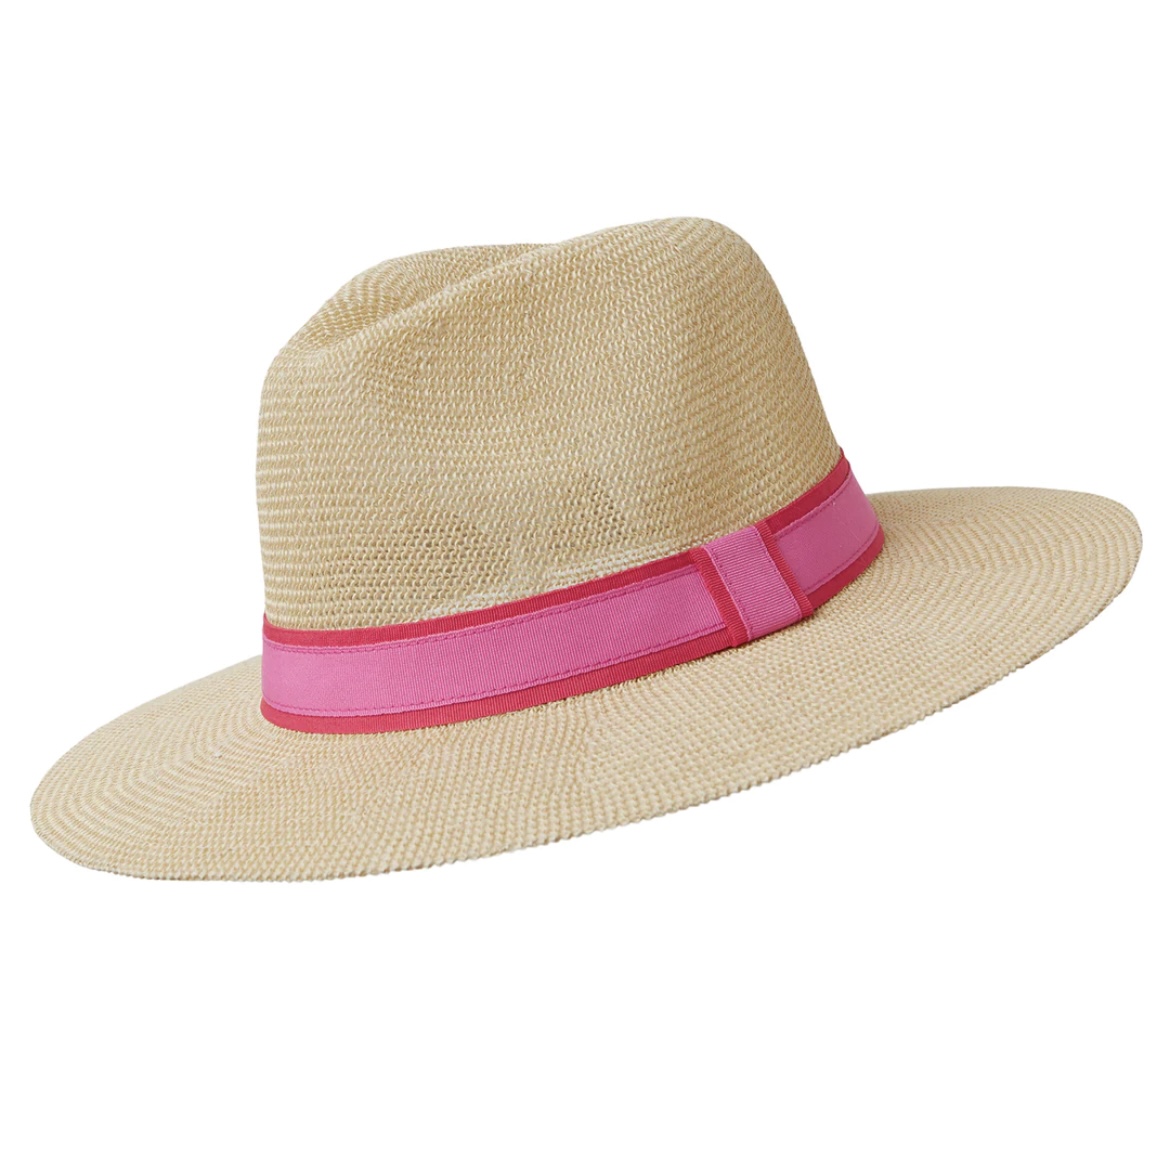 Somerville Panama Sun Hat - Coral/Pink